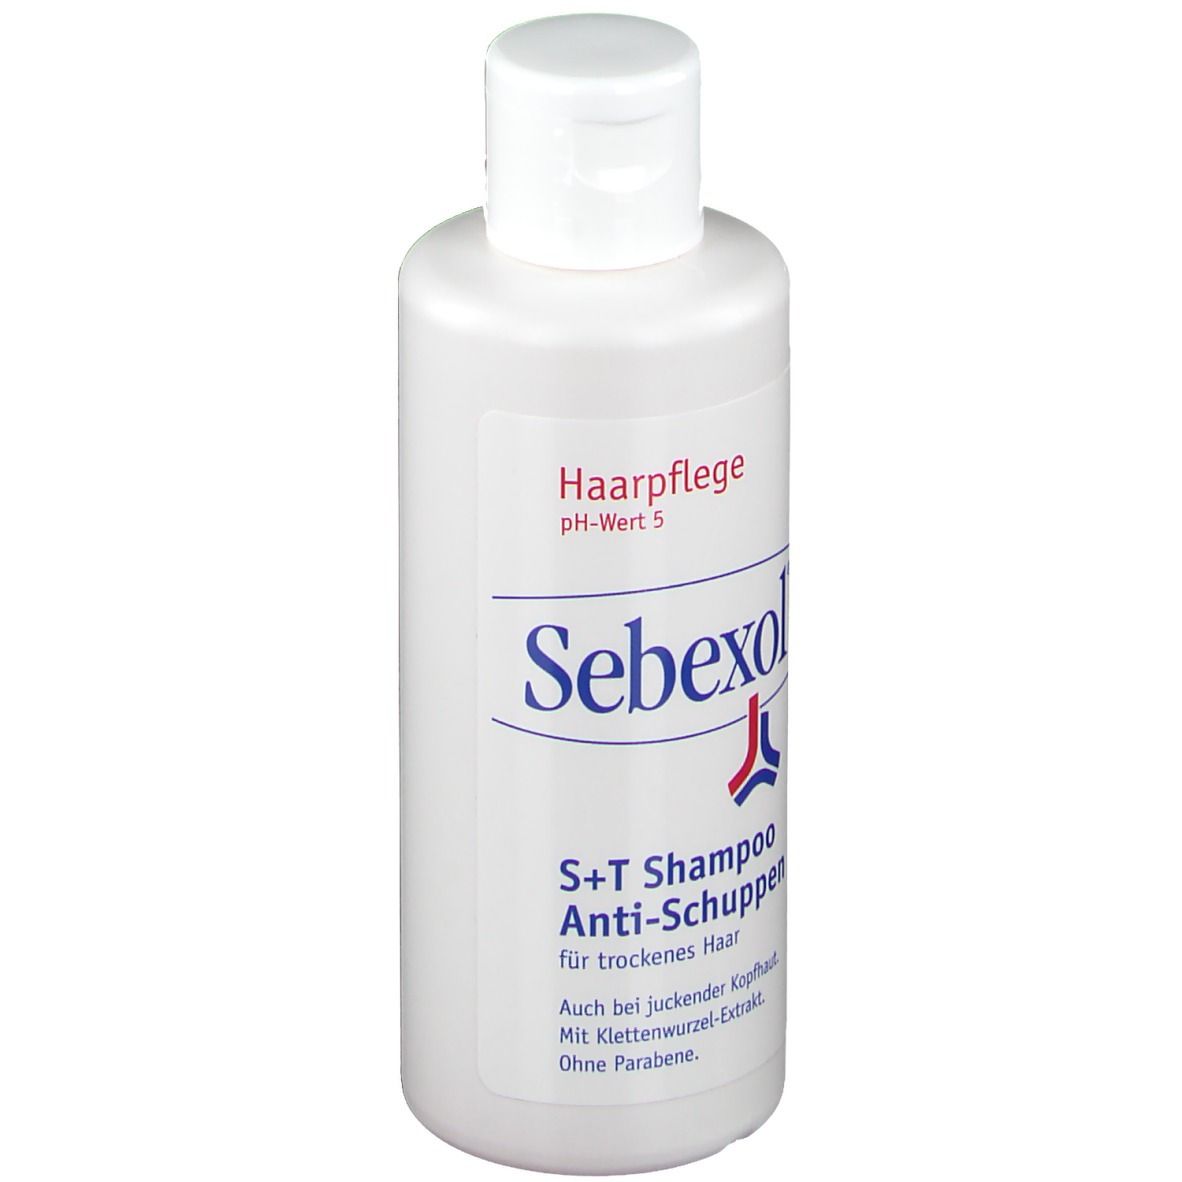 Sebexol® S+T Anti-Schuppen-Shampoo